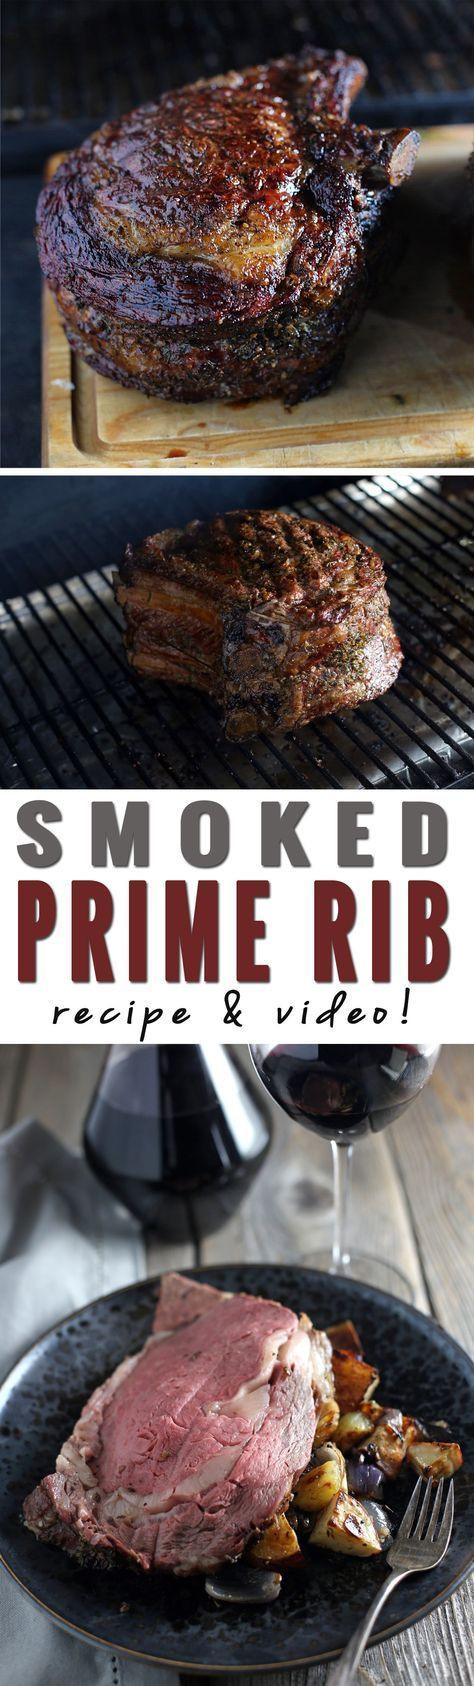 Prime Rib Roast On Pellet Grill
 Smoked Prime Rib recipe and video Recipe